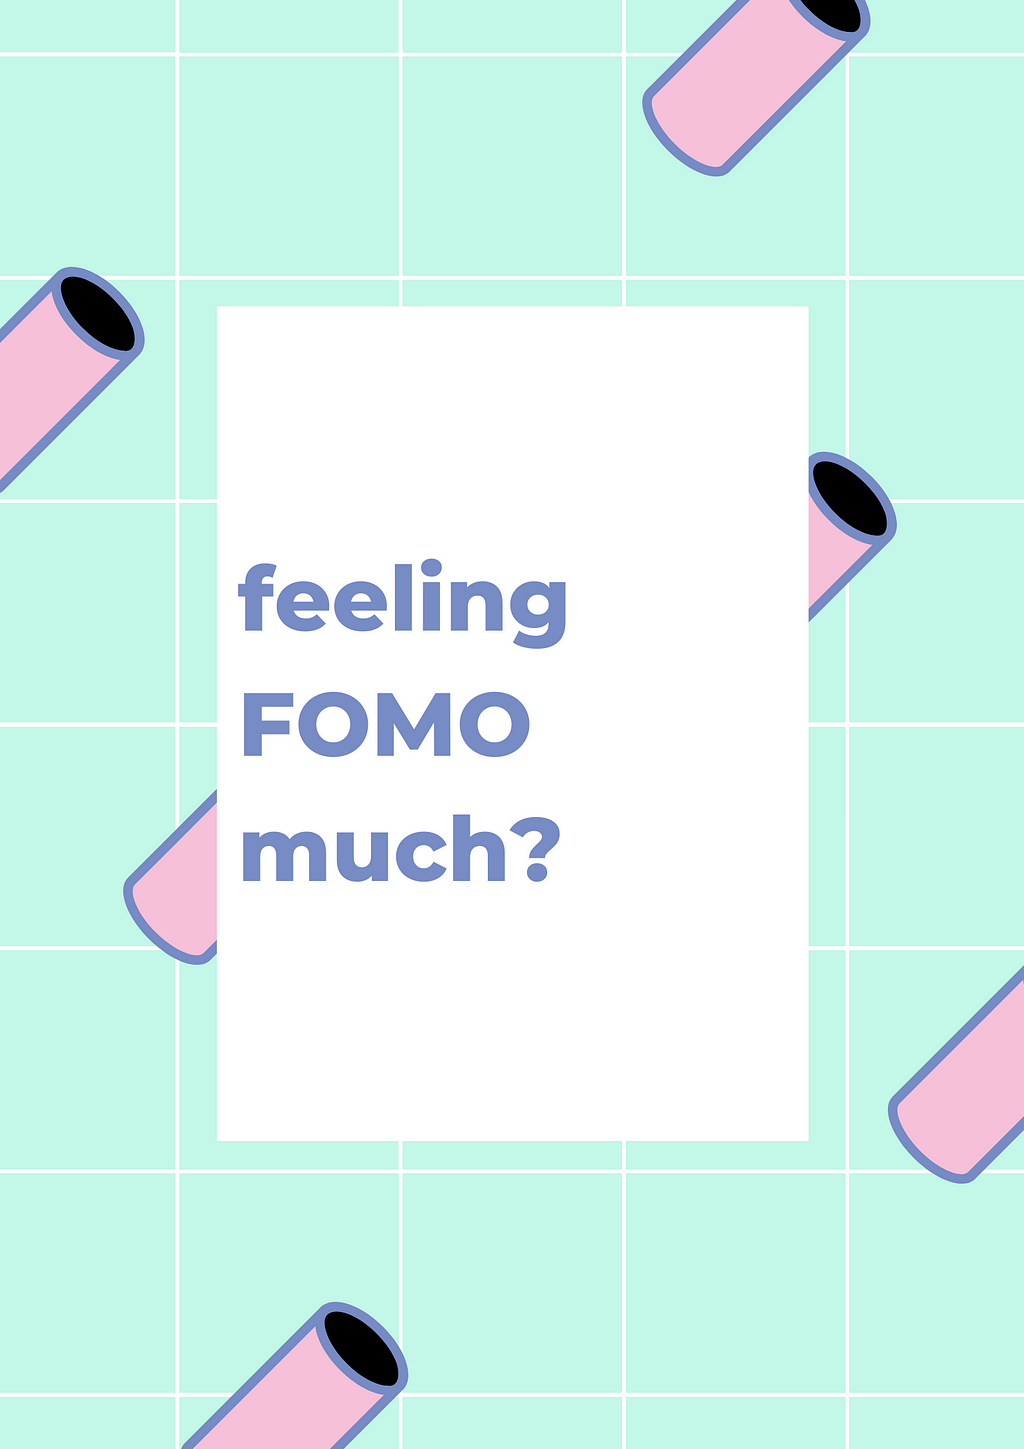 ‘feeling FOMO much?’ written on a poster.